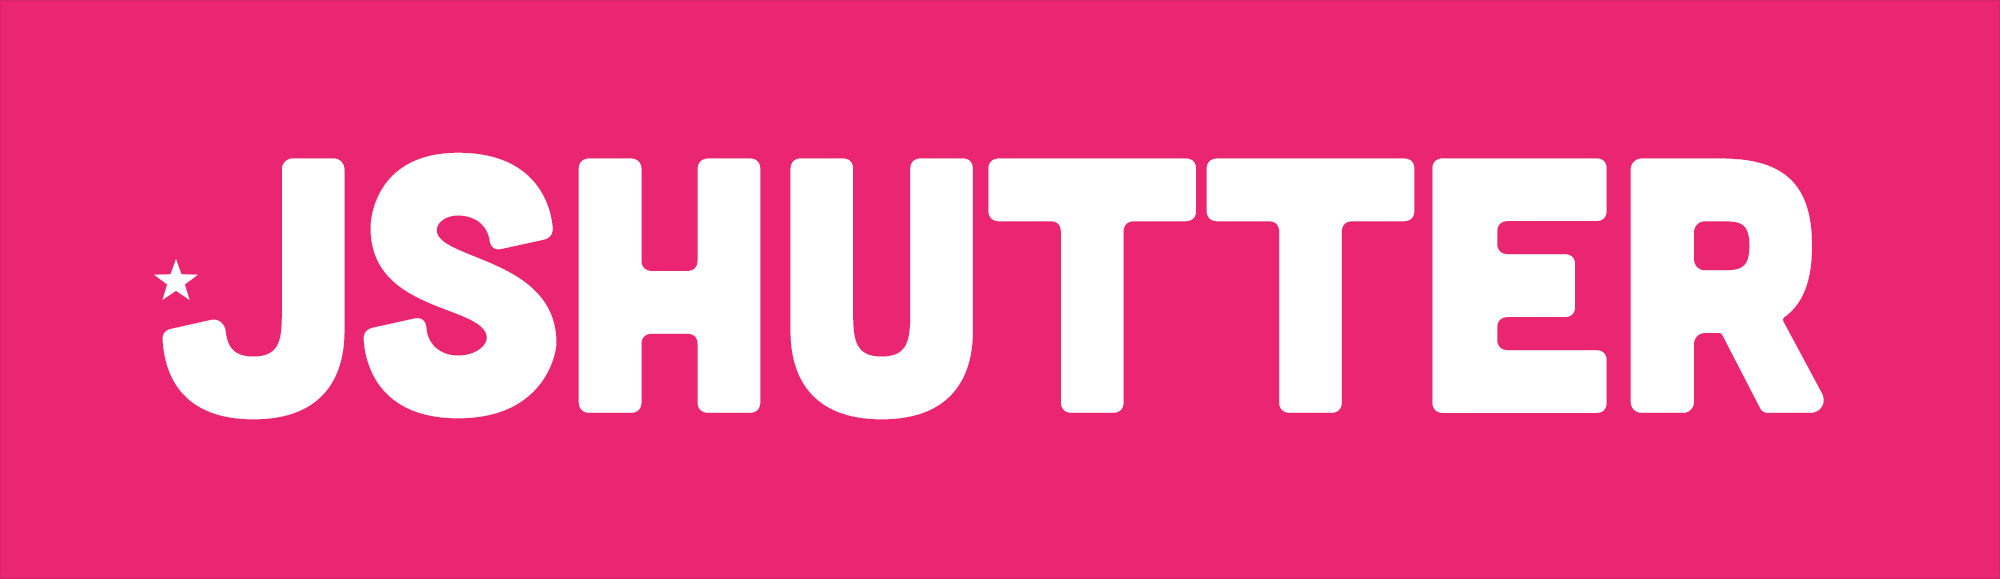 JSHUTTER_Logo